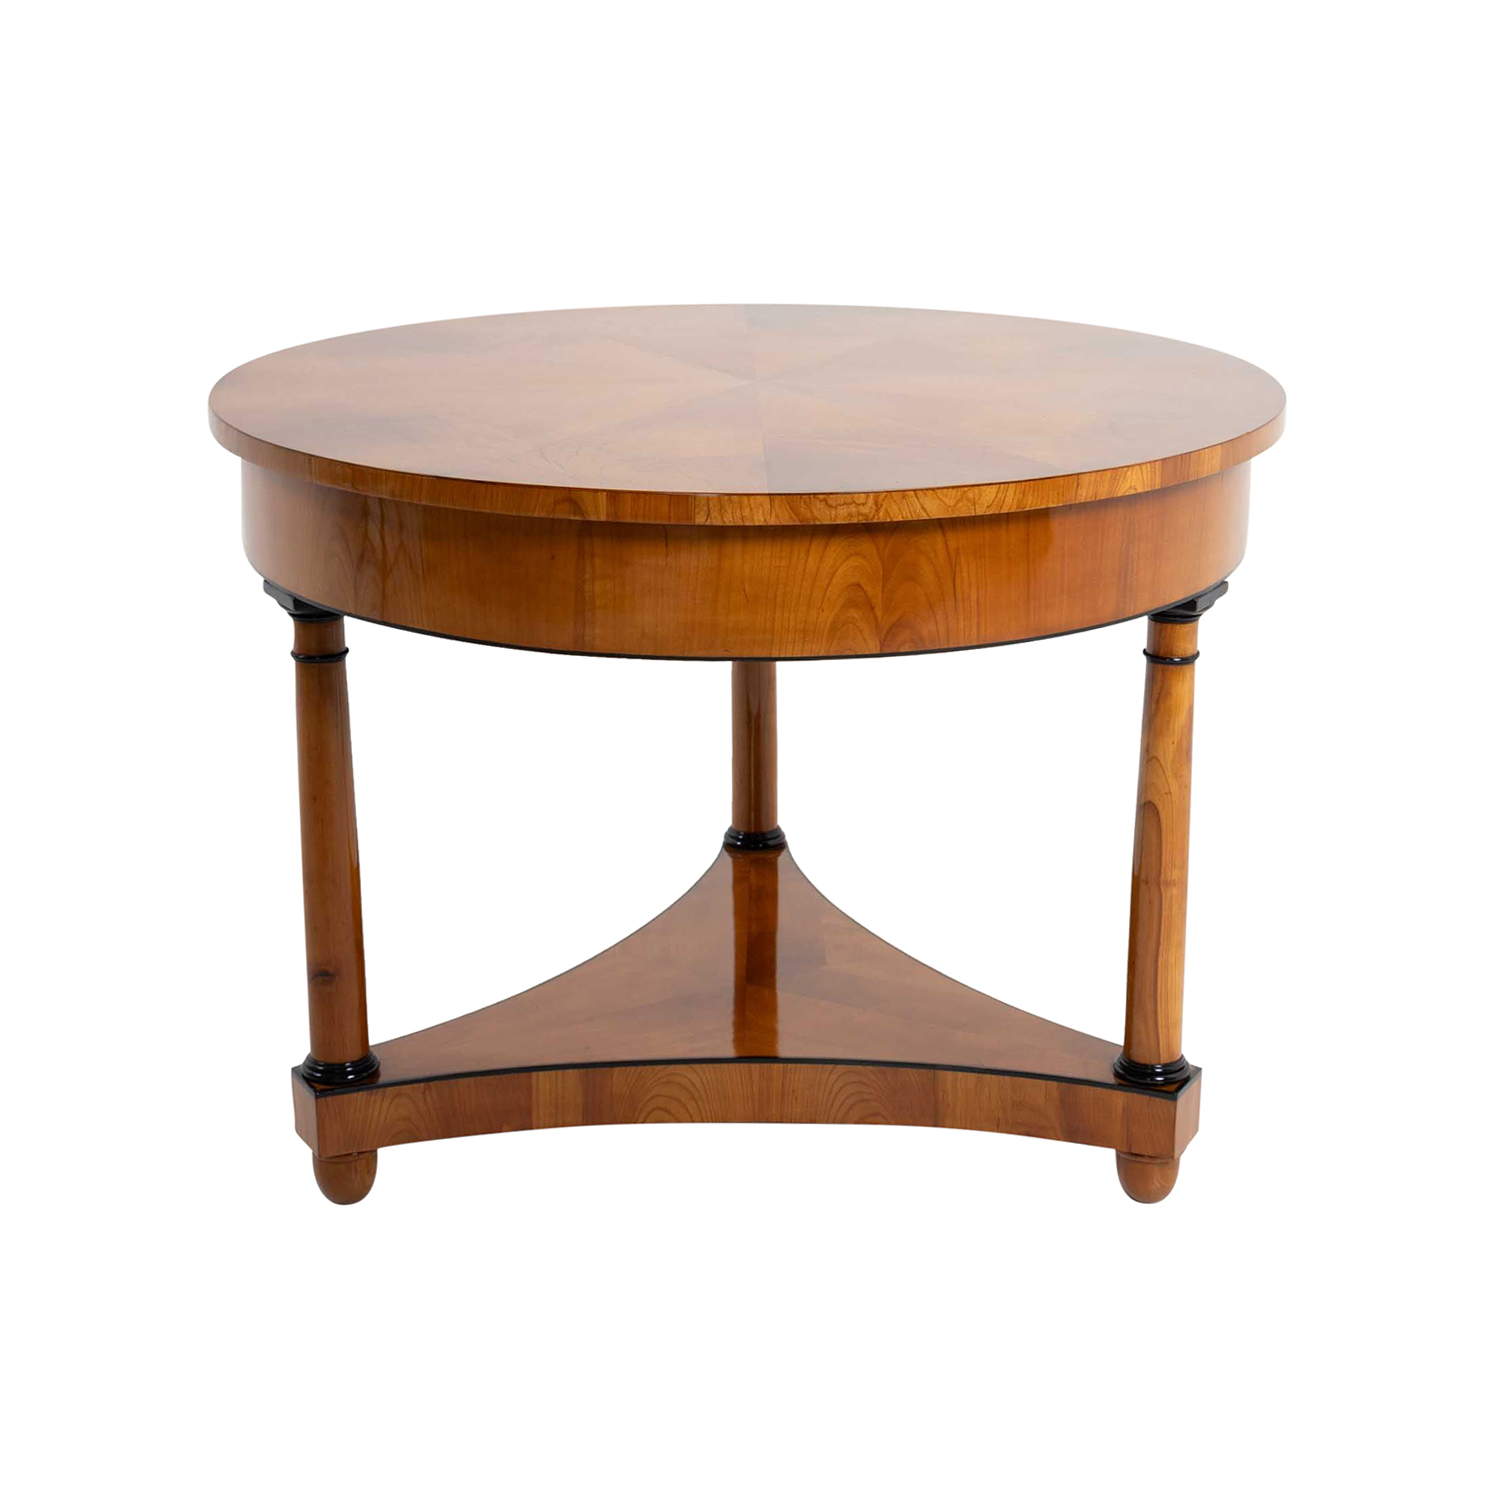 19th Century German Biedermeier Walnut Center Table – Antique Serving Table